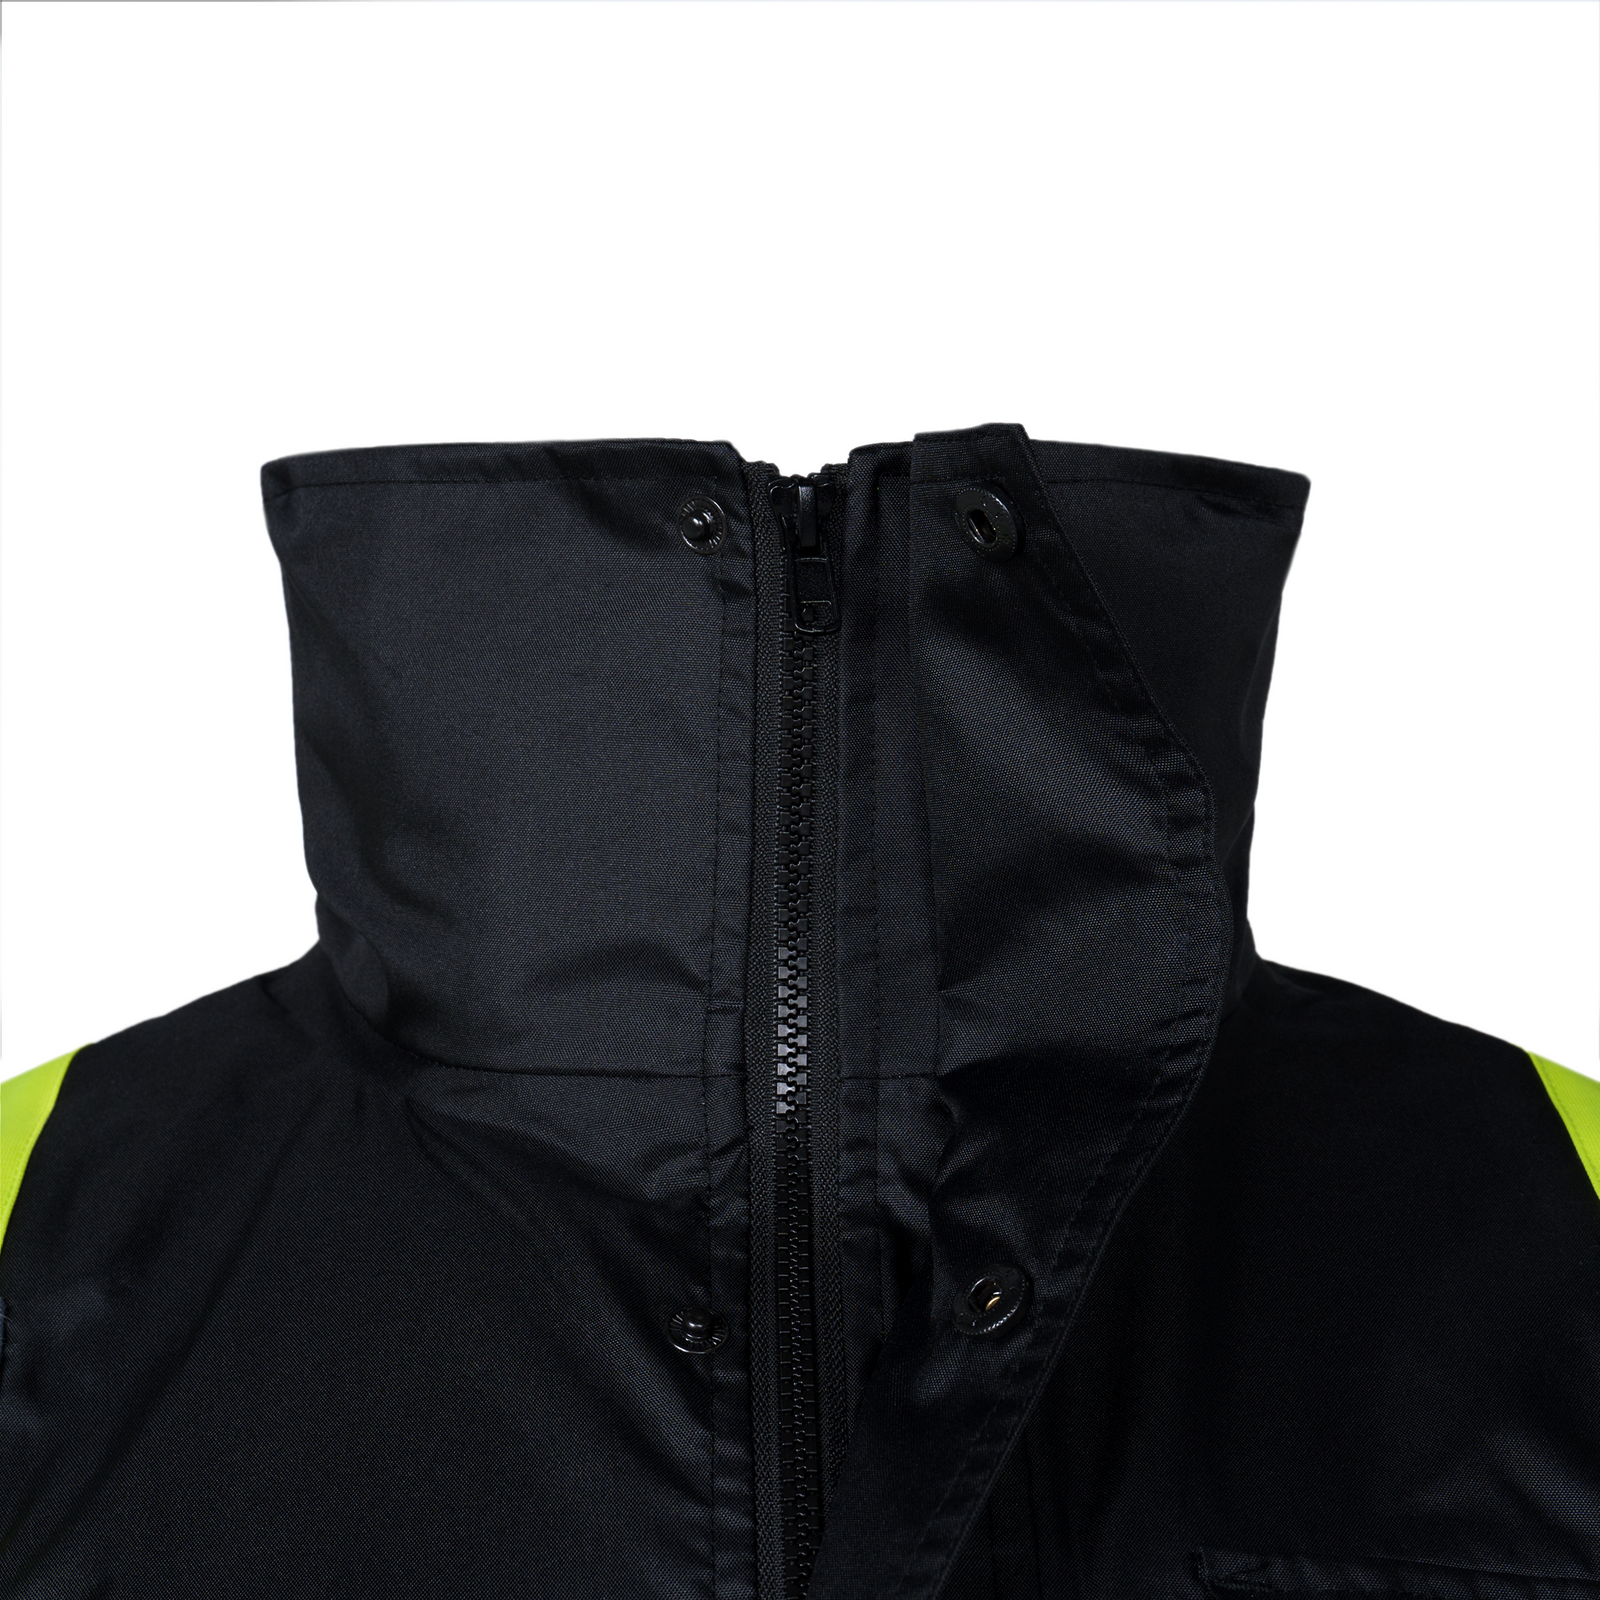 Black safety rain jacket with reflective stripes